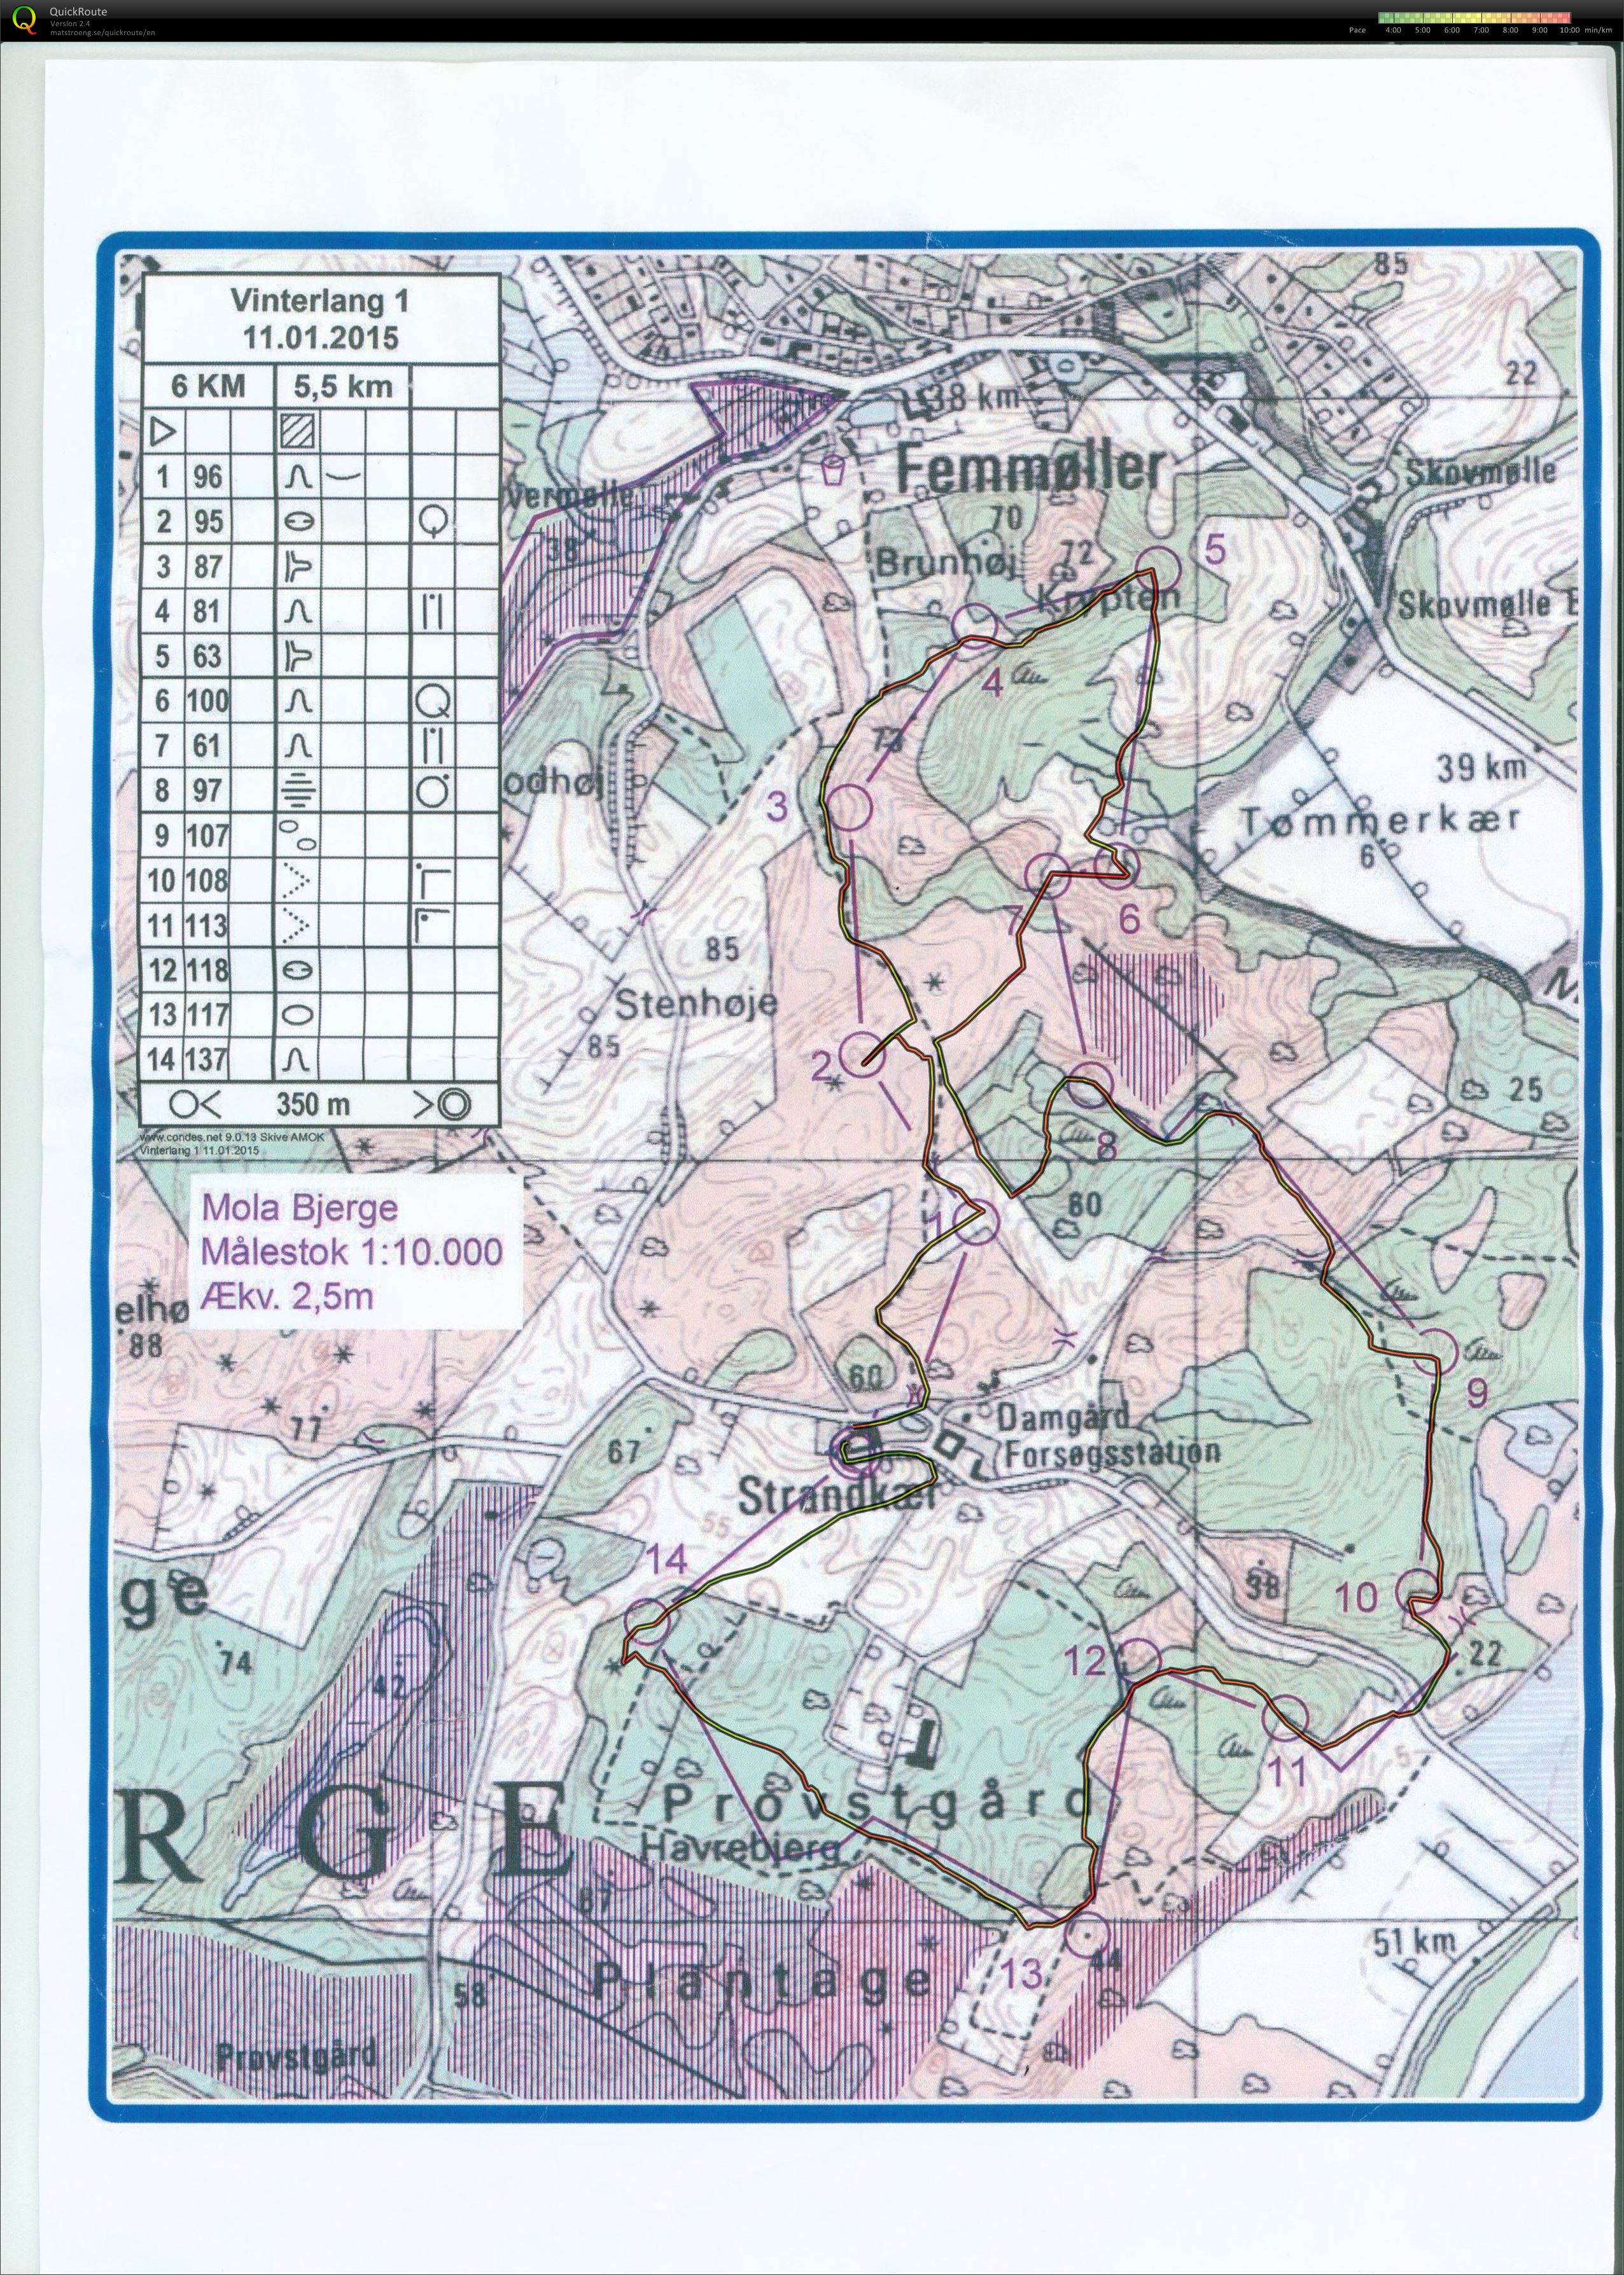 Mols Bjerge, Langdistance 1, 6 km, Pia Gade, 110115 (2015-01-11)